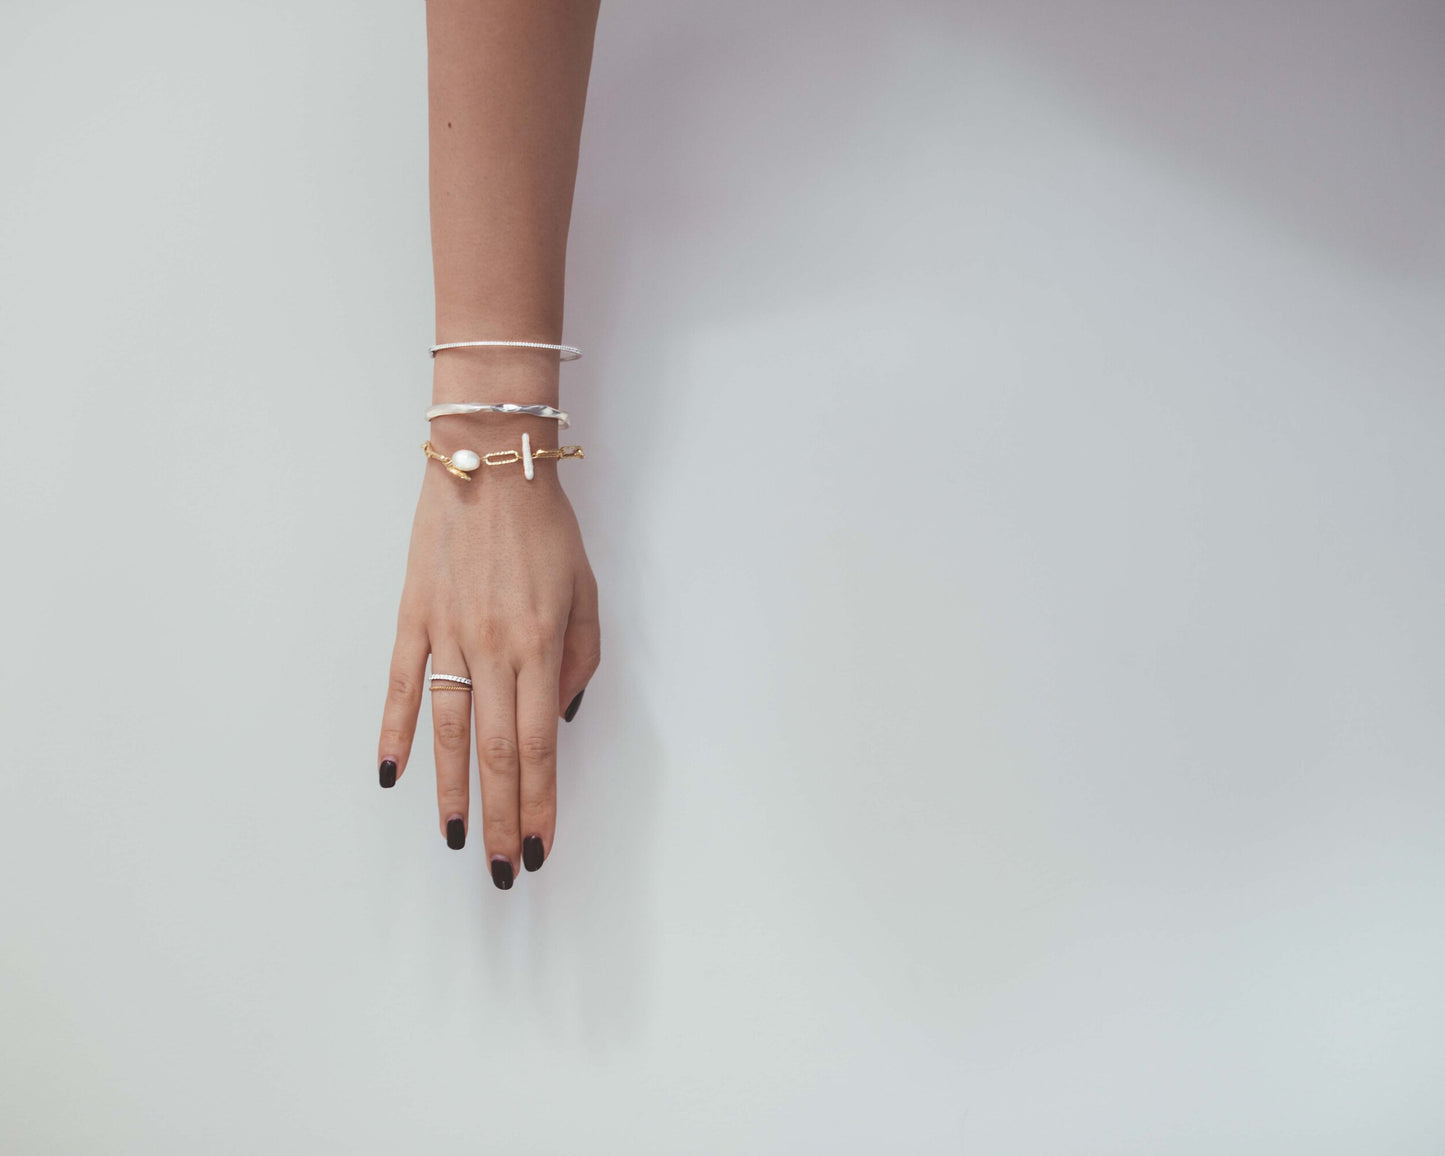 "Océane" baroque pearl links bracelet